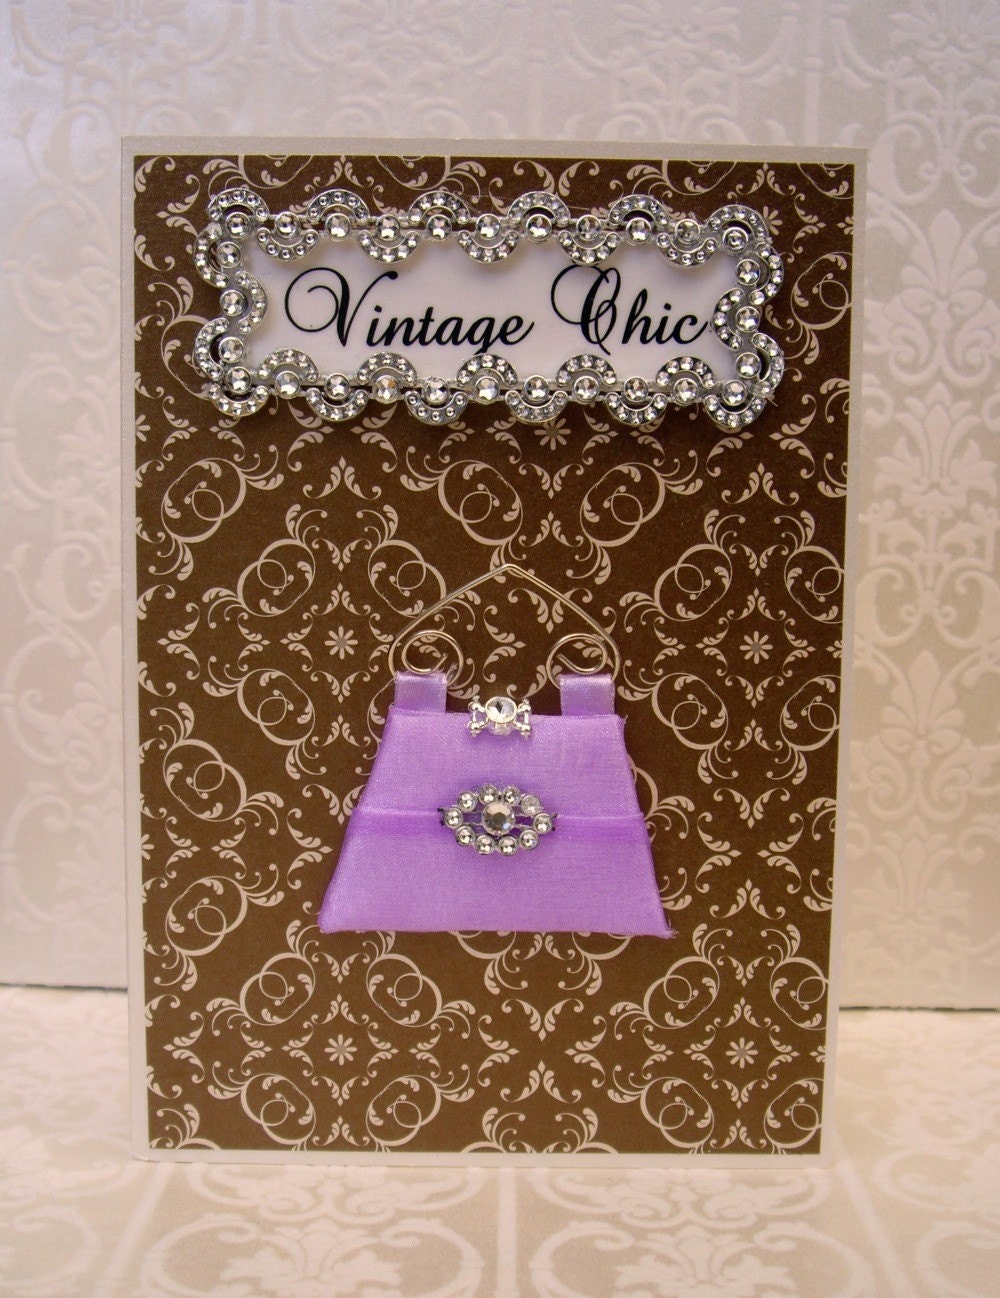 15% SALE Vintage Chic Personalised Card / Lilac Clutch Bag / Handmade Greeting Card